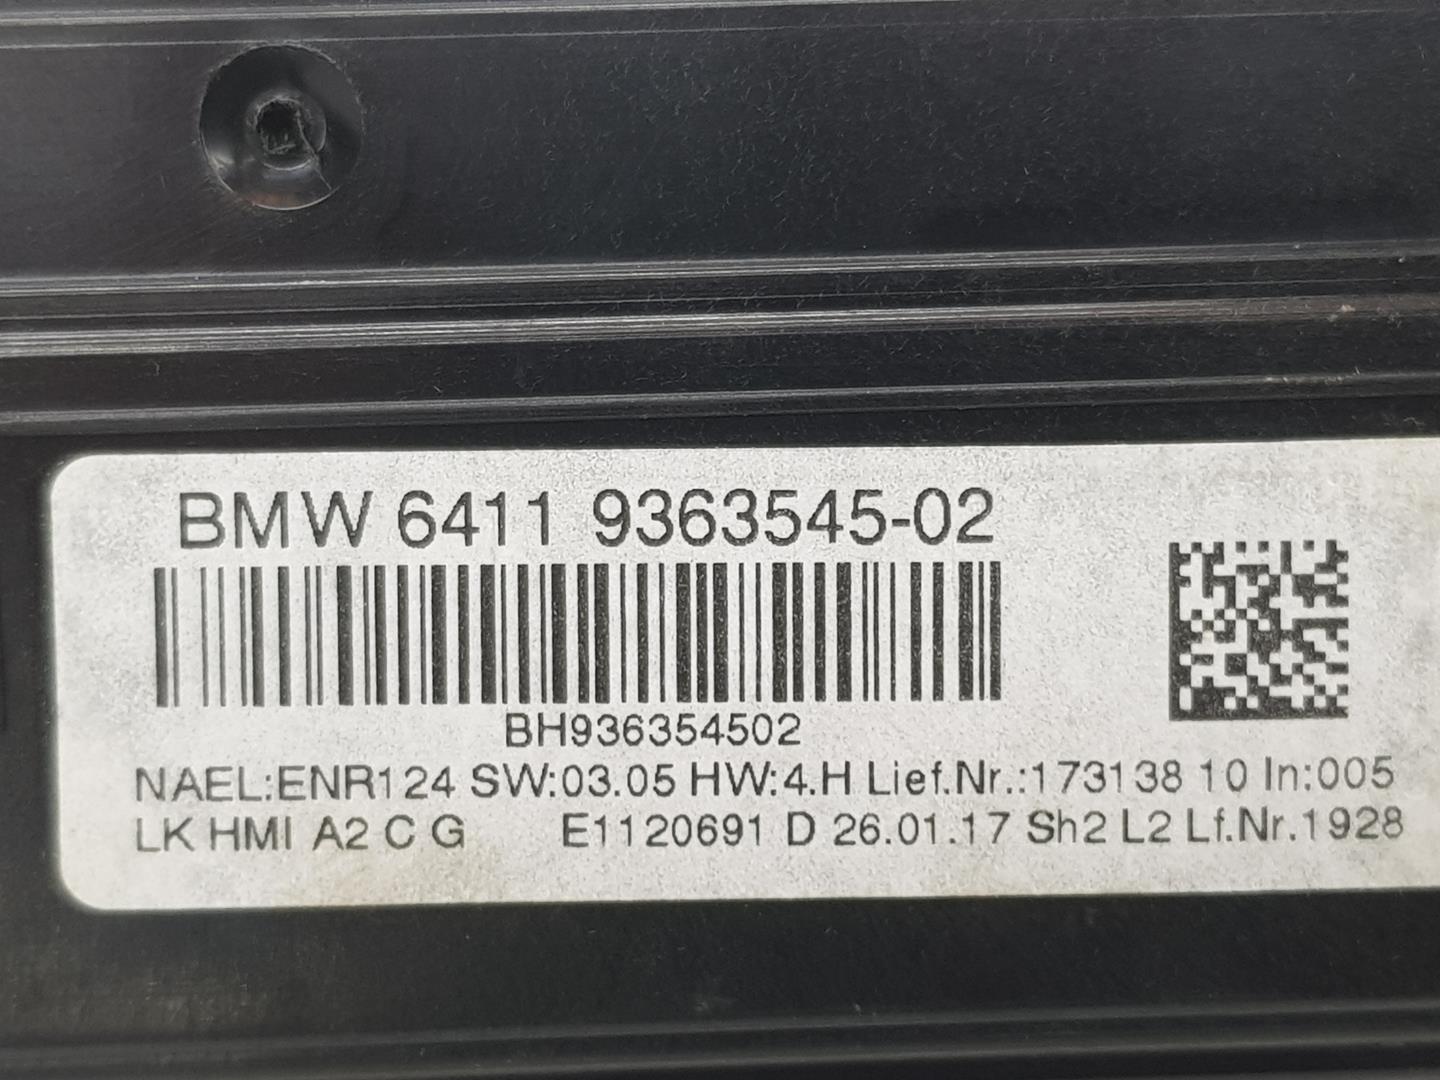 BMW 2 Series F22/F23 (2013-2020) Pегулятор климы 64119363545, 64119363545 21052199